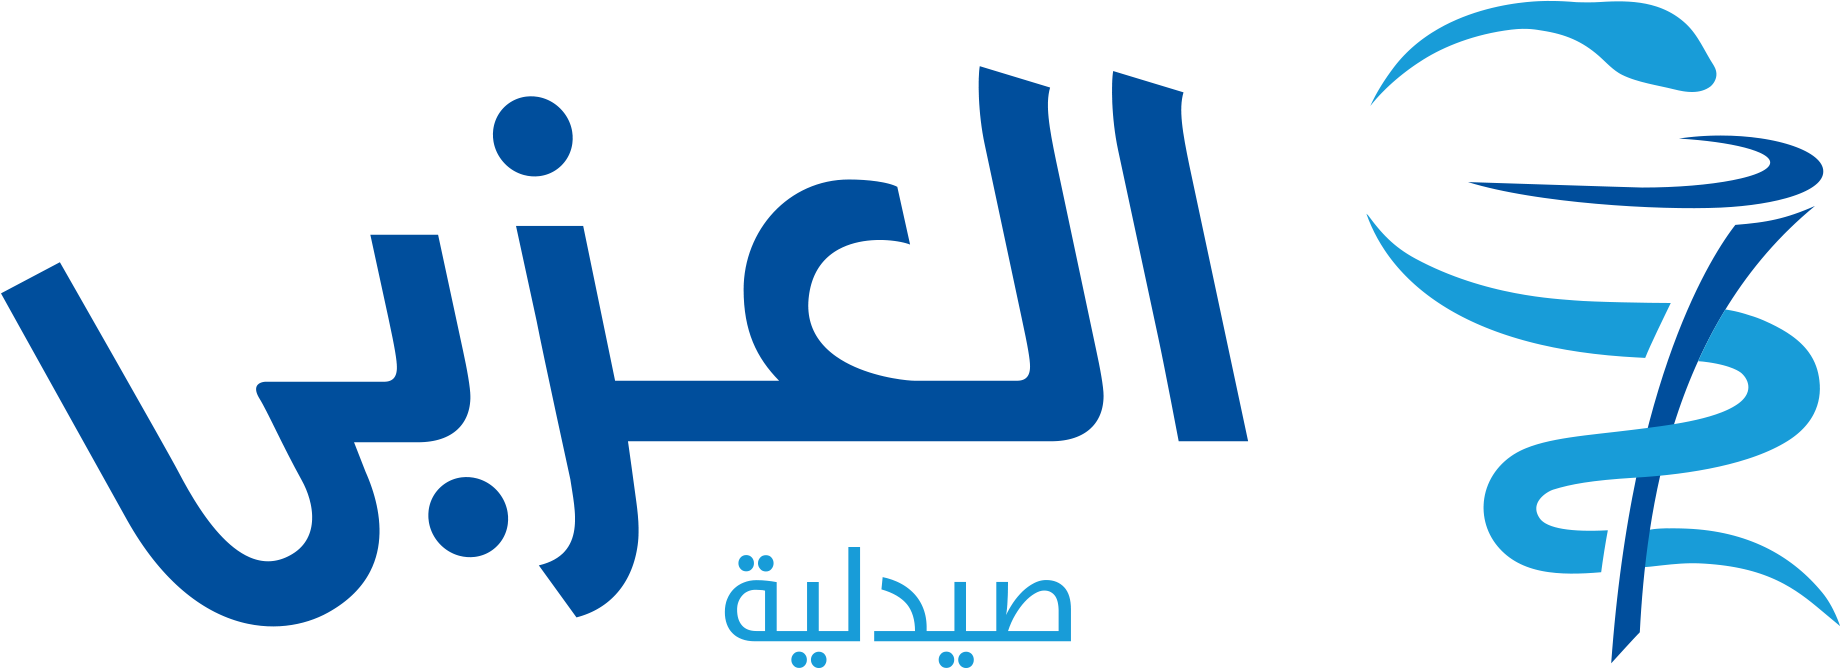 ezaby Pharmacy logo